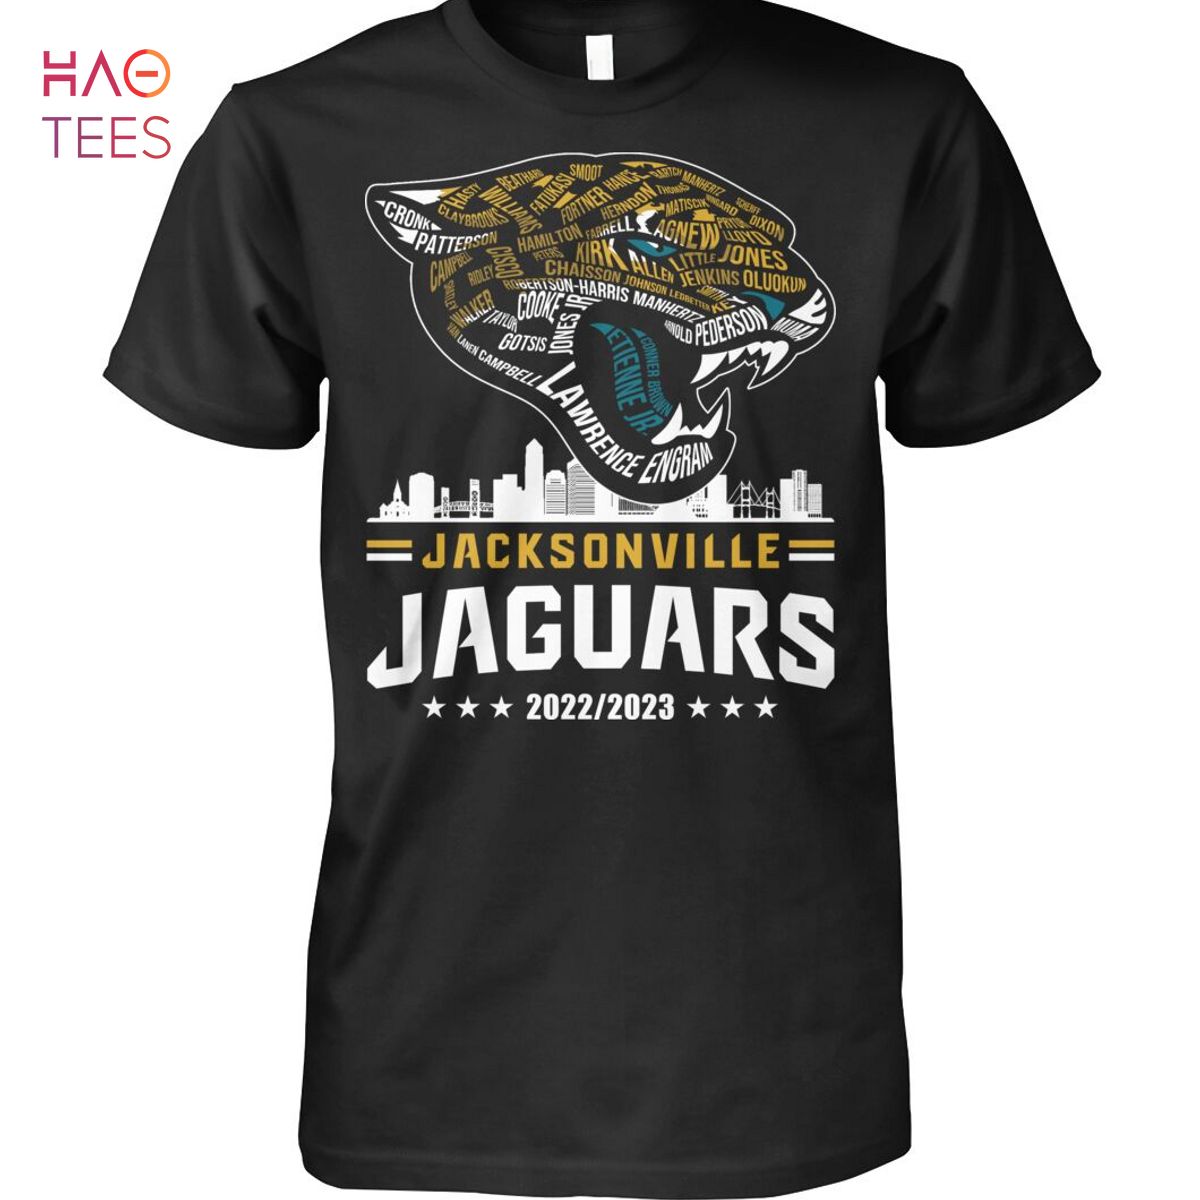 Jacksonville Jagurs 2022 2023 Champions Shirt